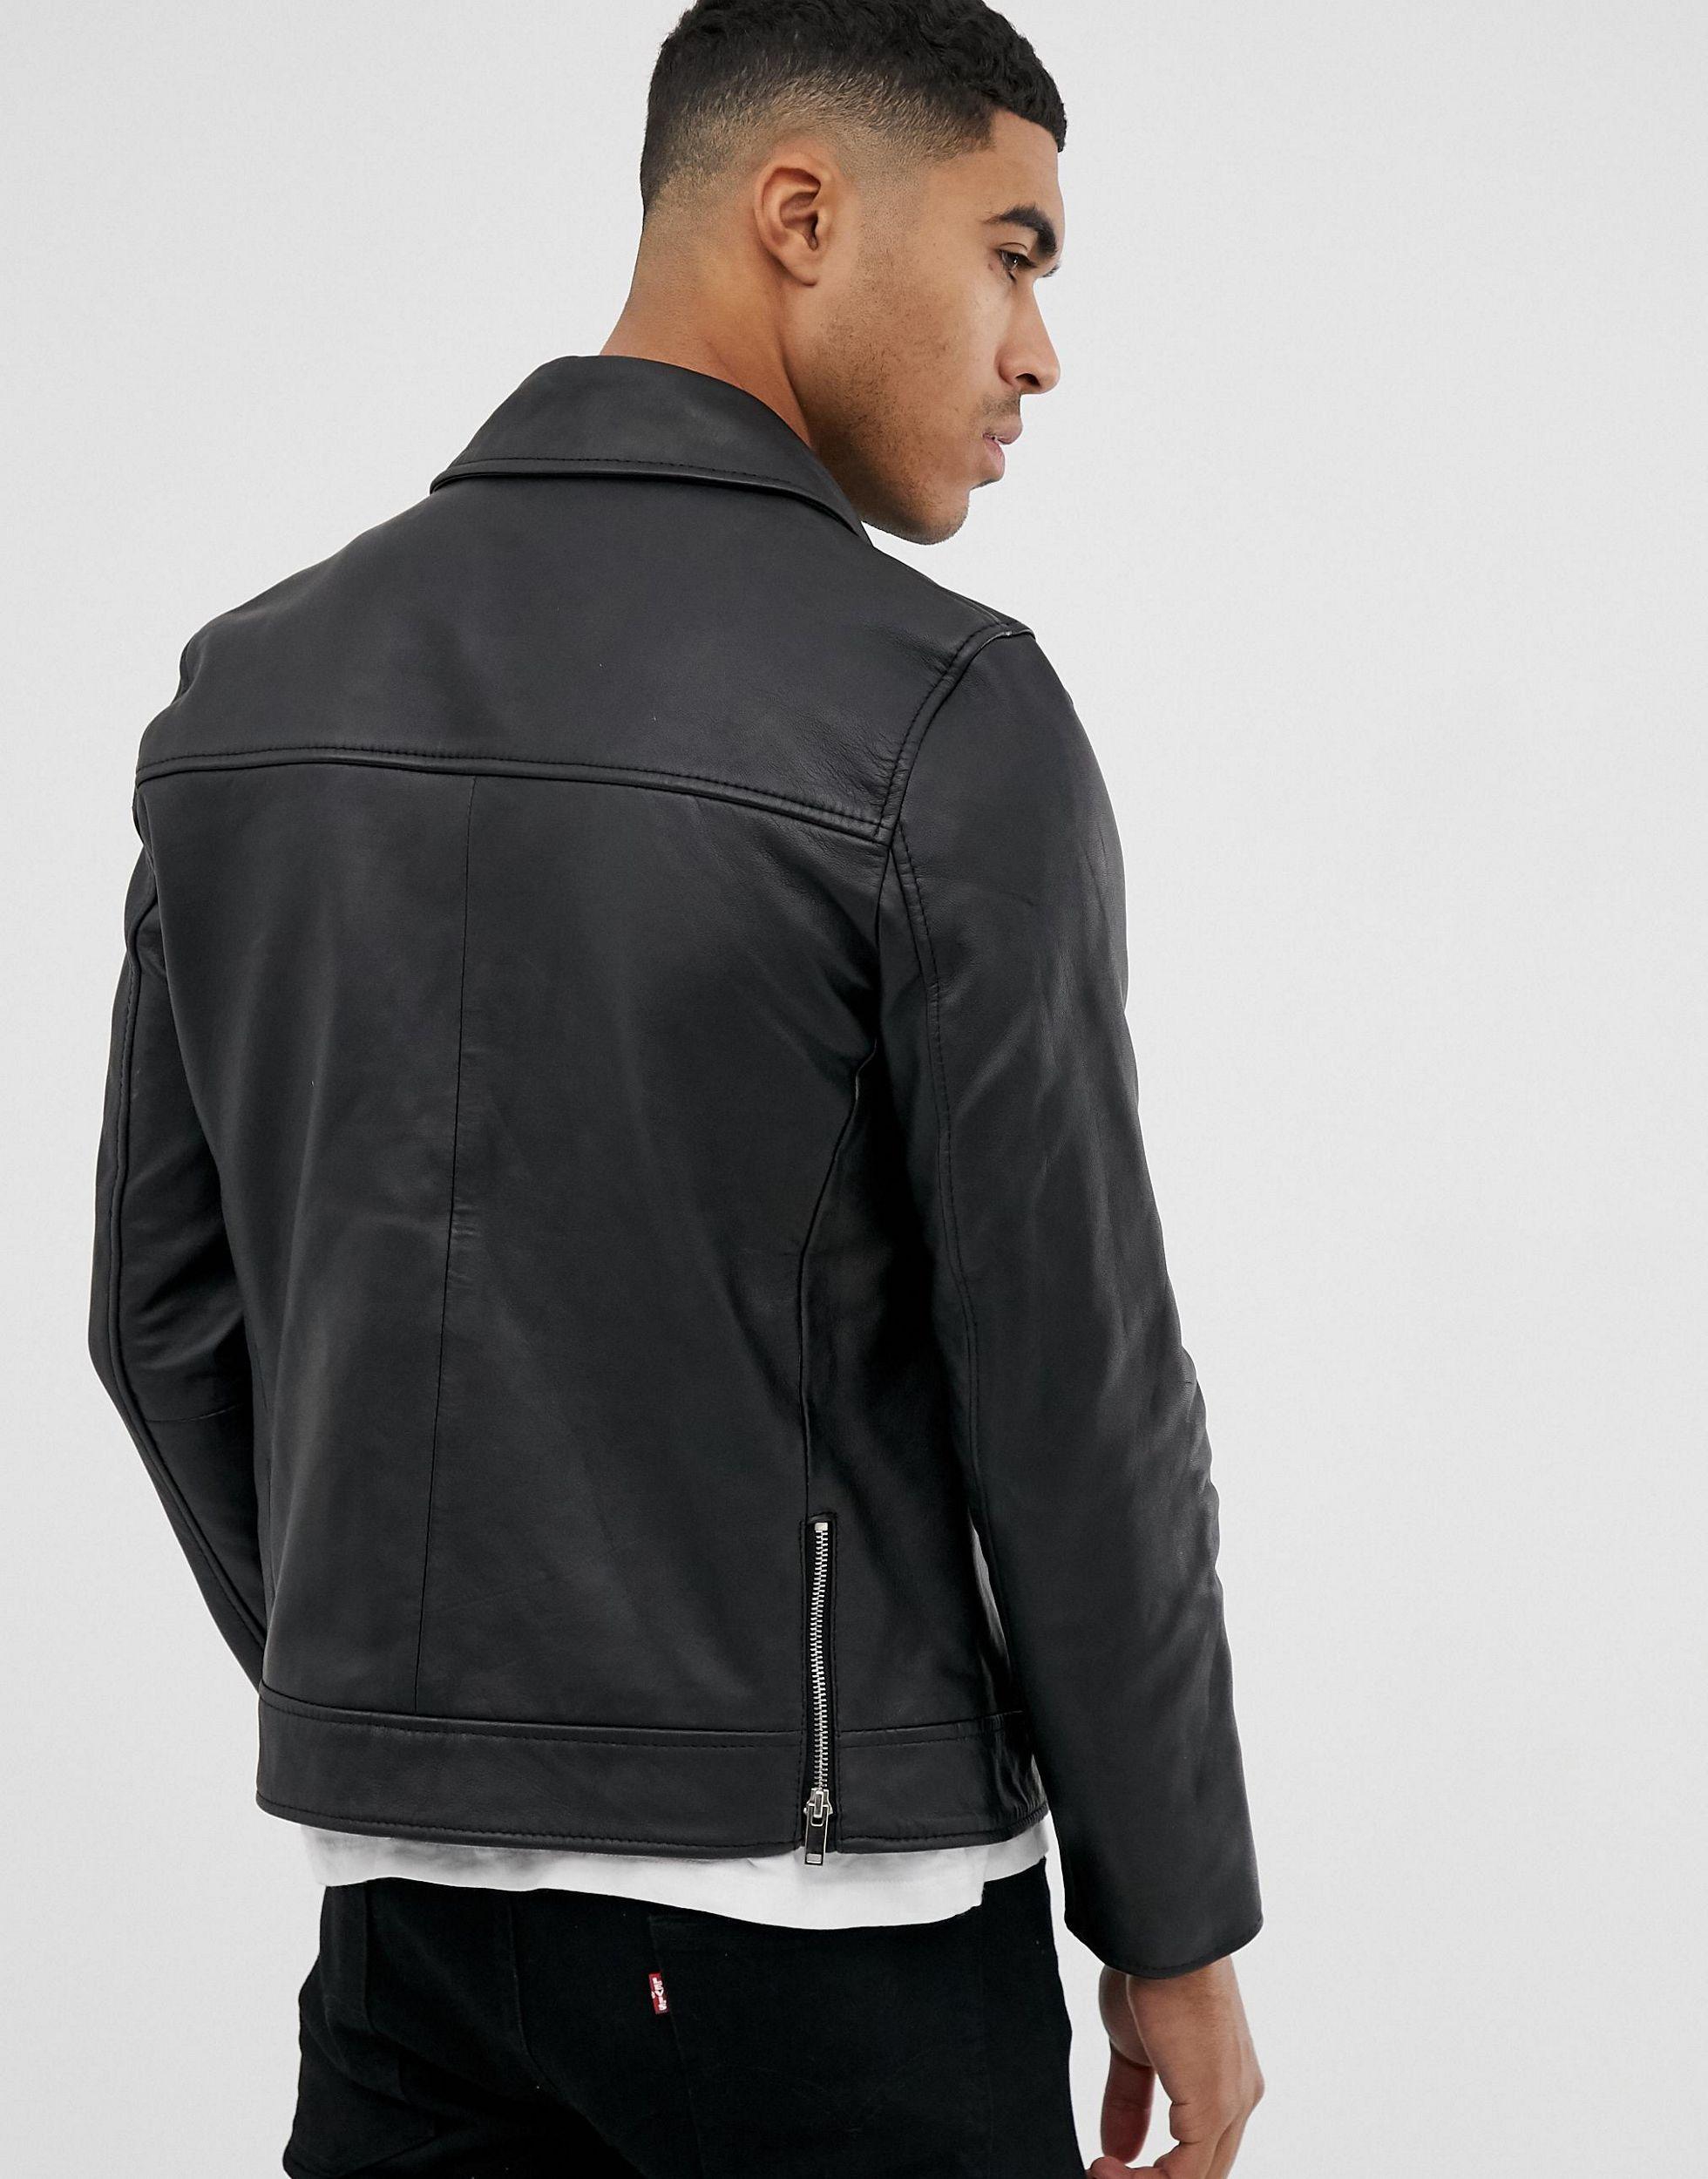 BOLONGARO TREVOR Black Whoese Leather Jacket RRP £325 